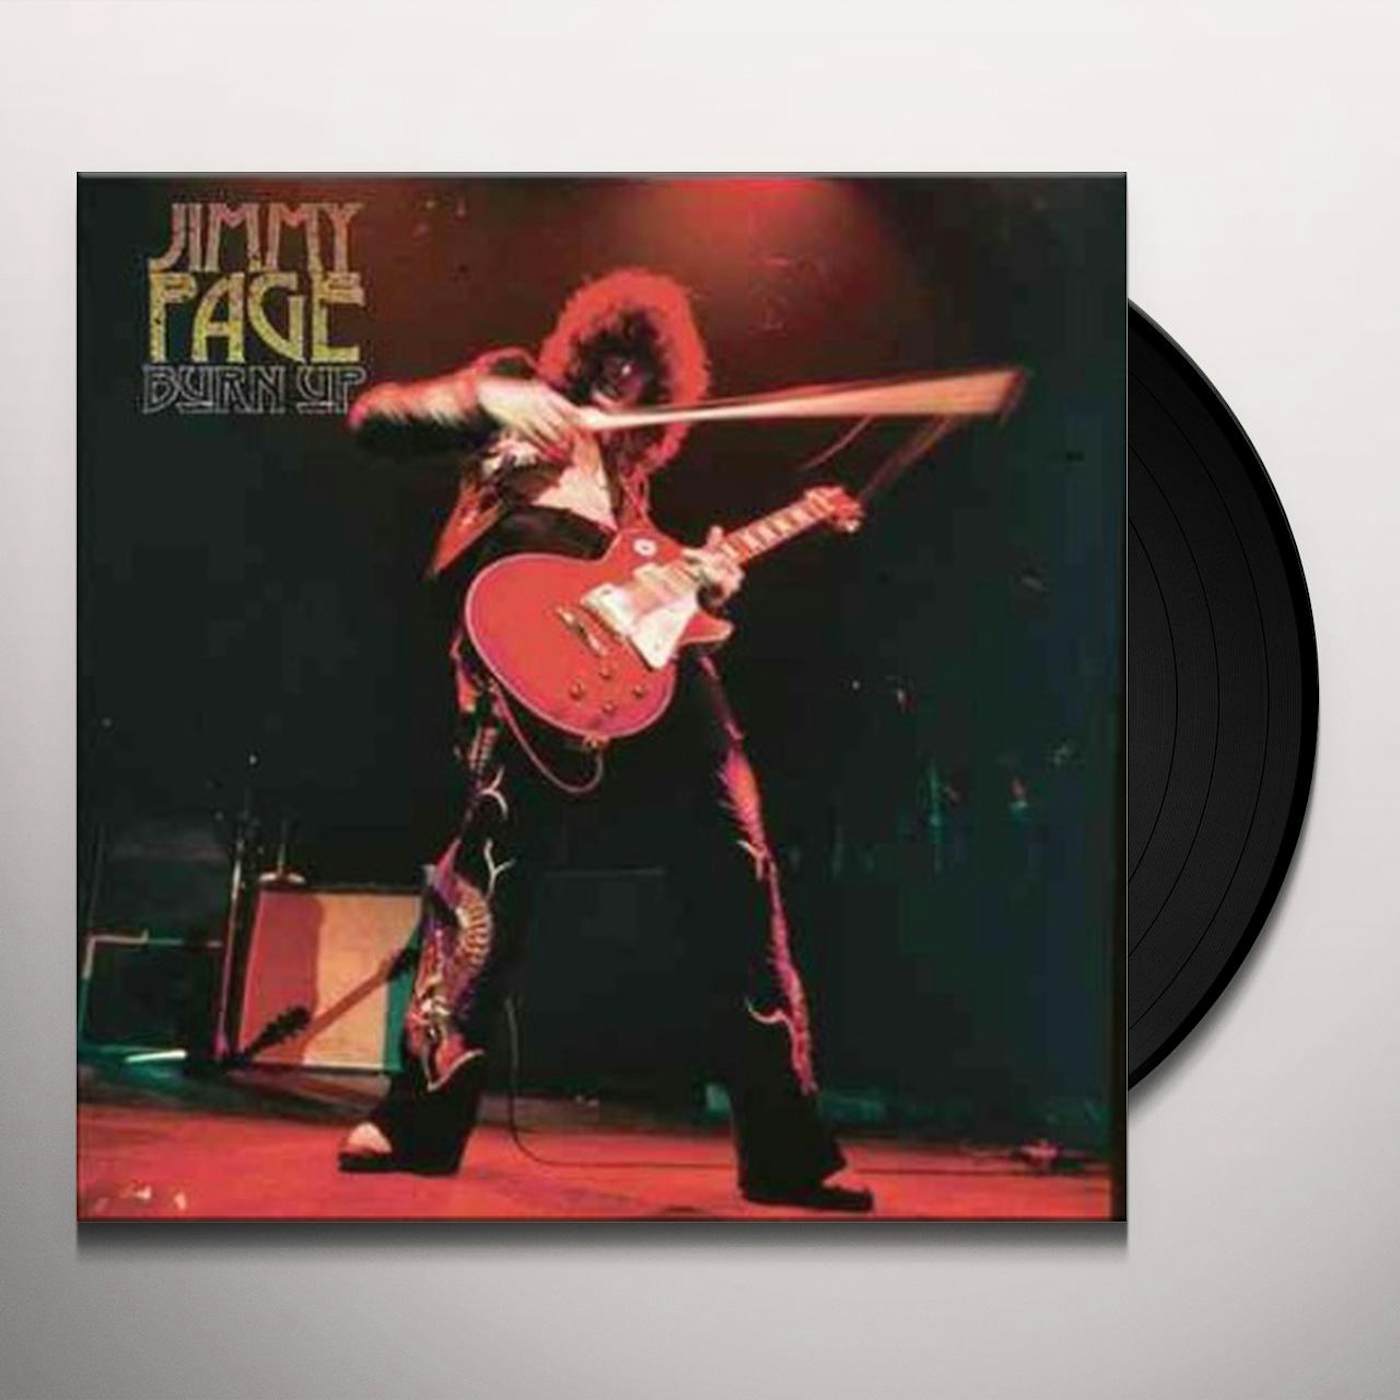 Jimmy Page Burn Up Vinyl Record